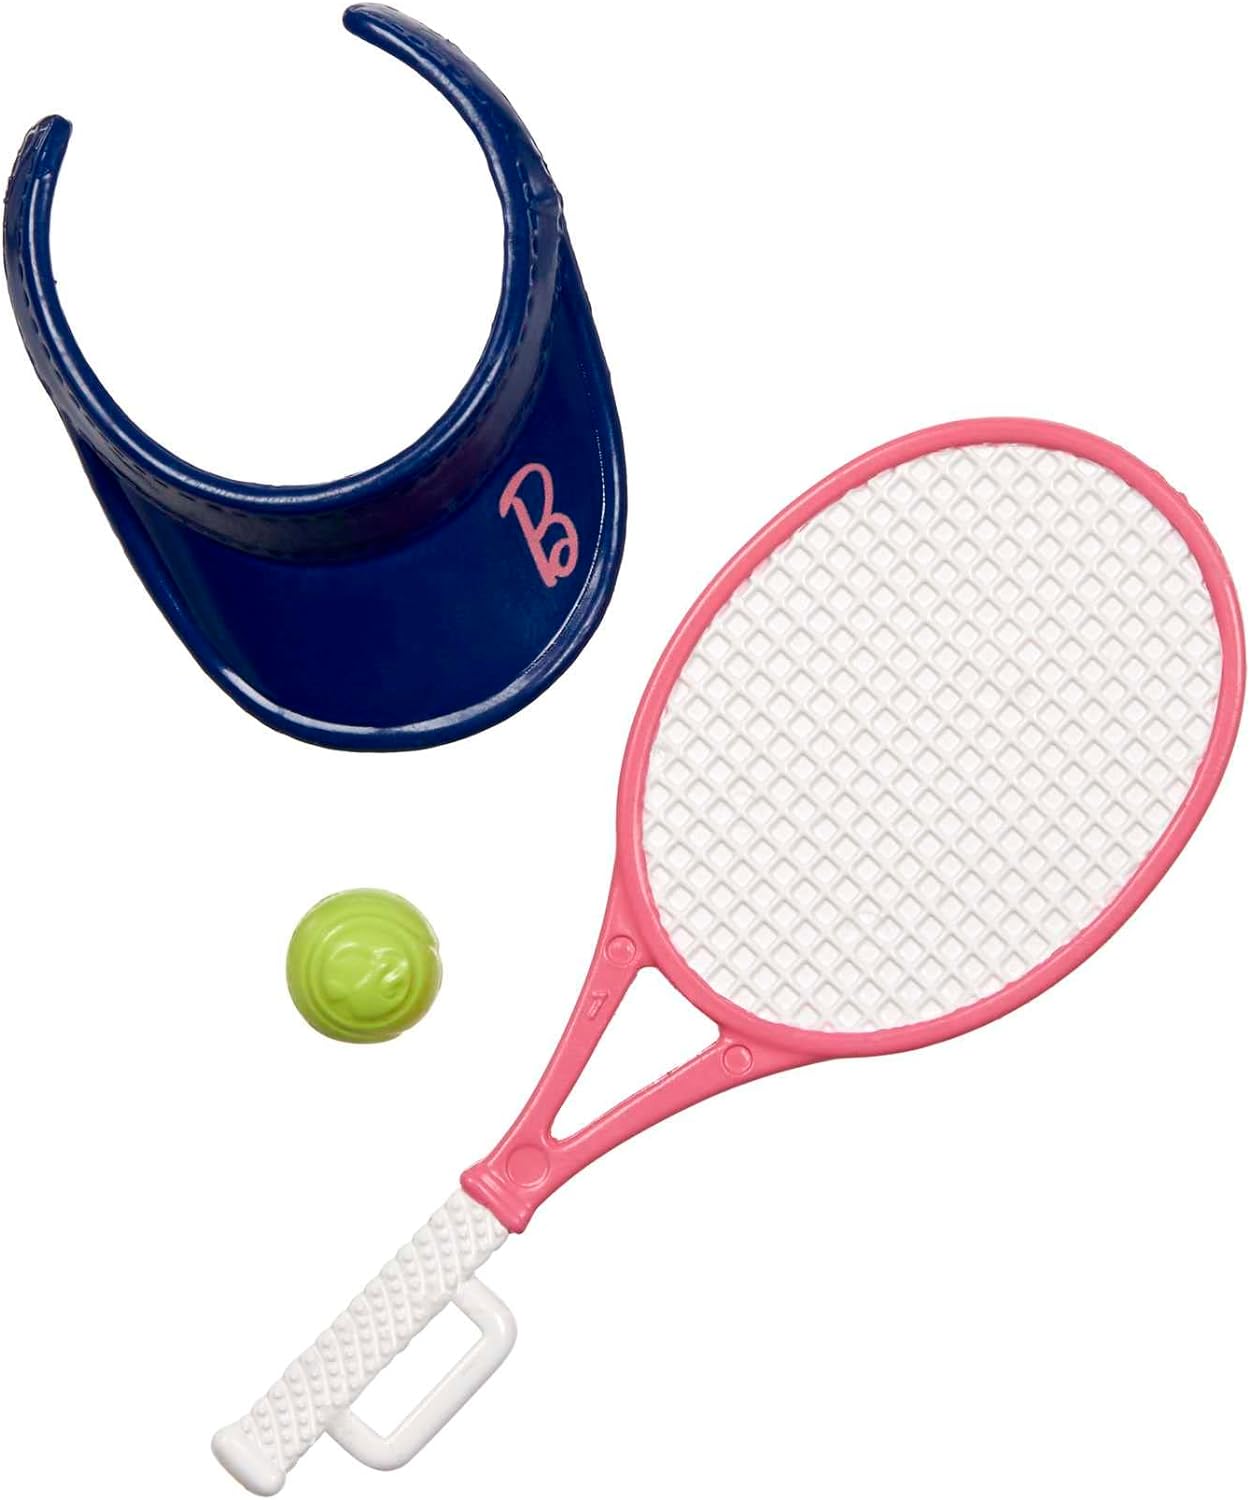 Barbie - Tennis Player Doll